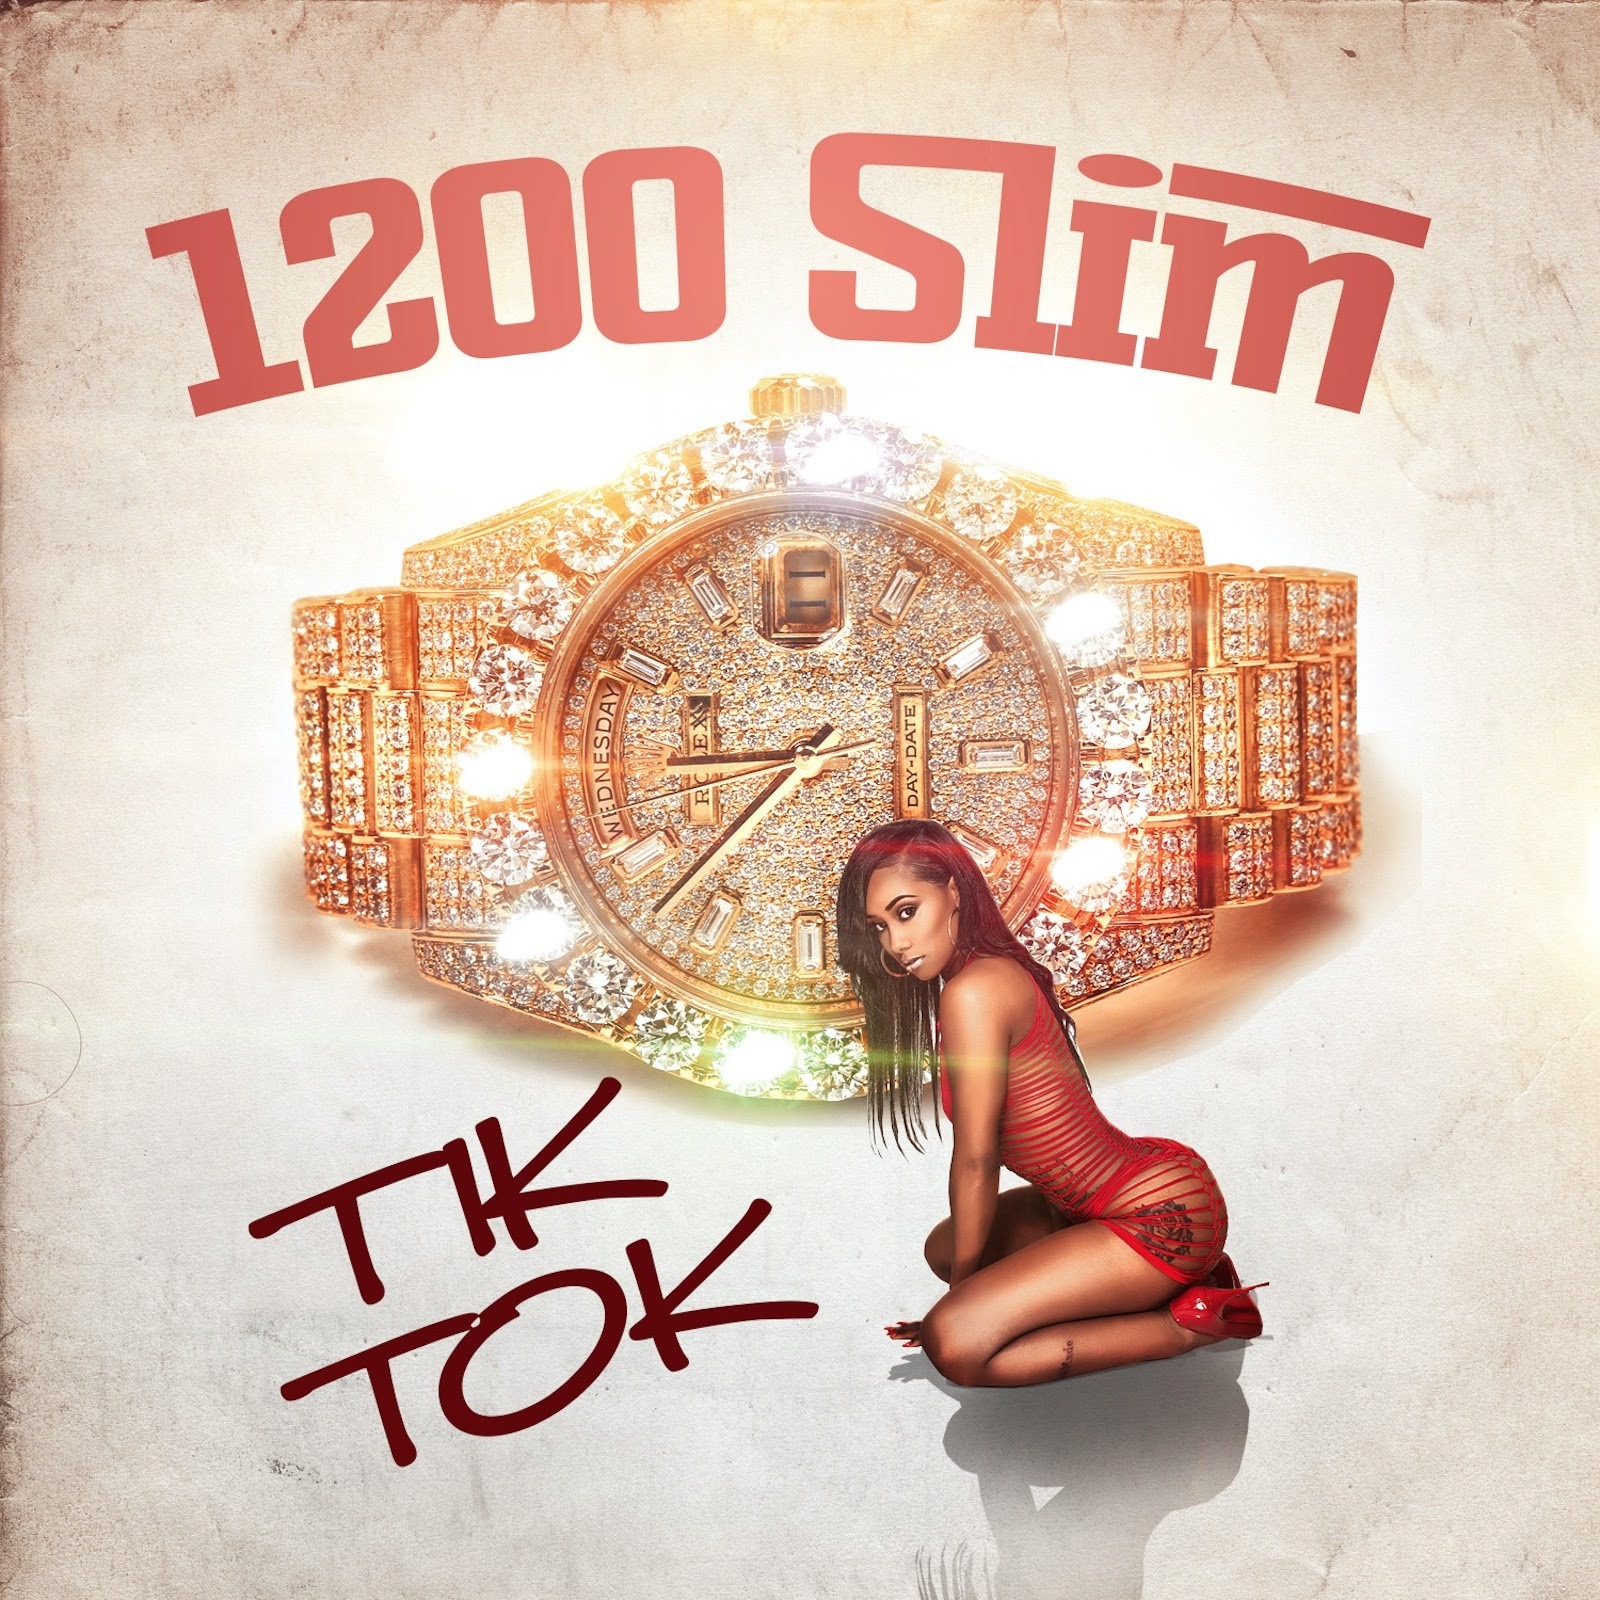 Louisiana Rapper Slim 1200 Releases New Number – ‘TIK TOK’